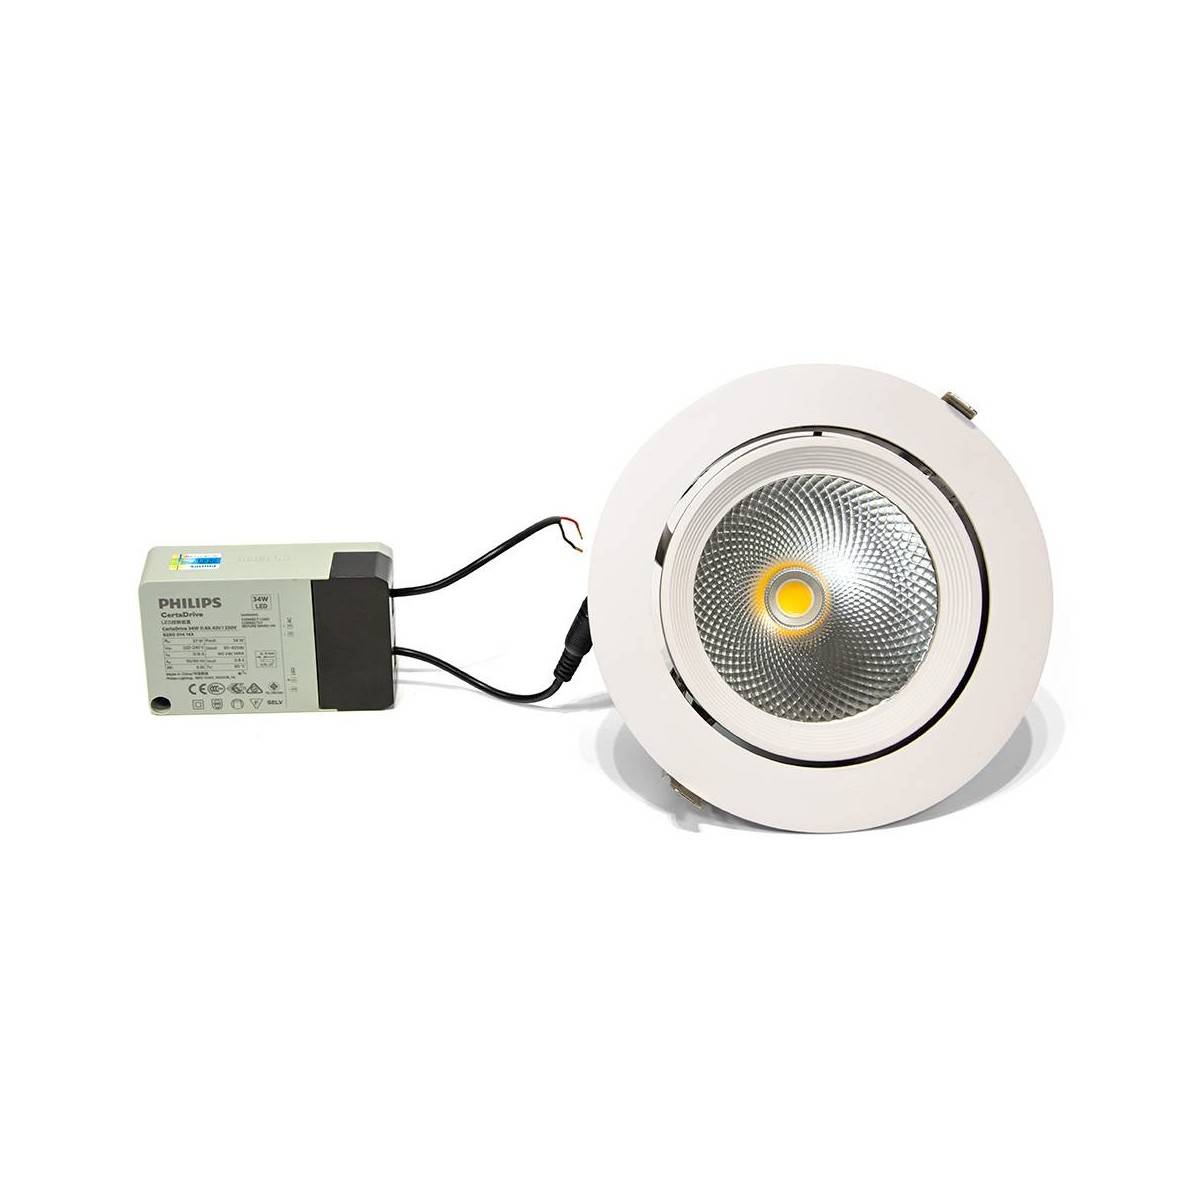 Downlight LED circular encastrável basculante 32W 60 °